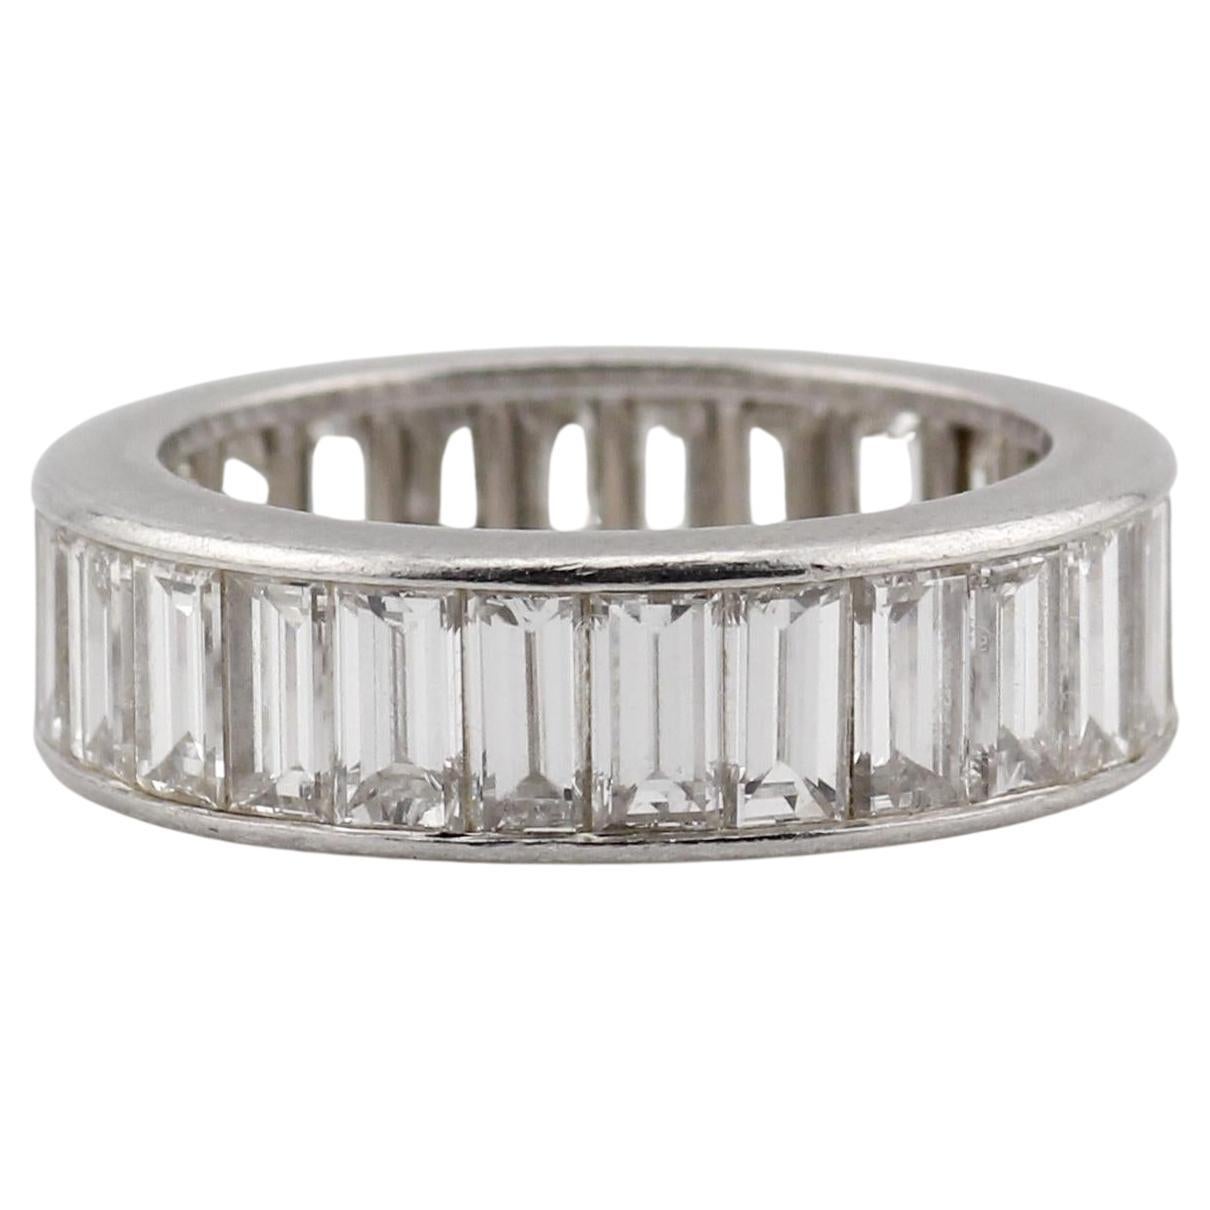 Van Cleef & Arpels Channel Set Baguette Diamond Platinum 6mm Band Ring Size 6.25 For Sale